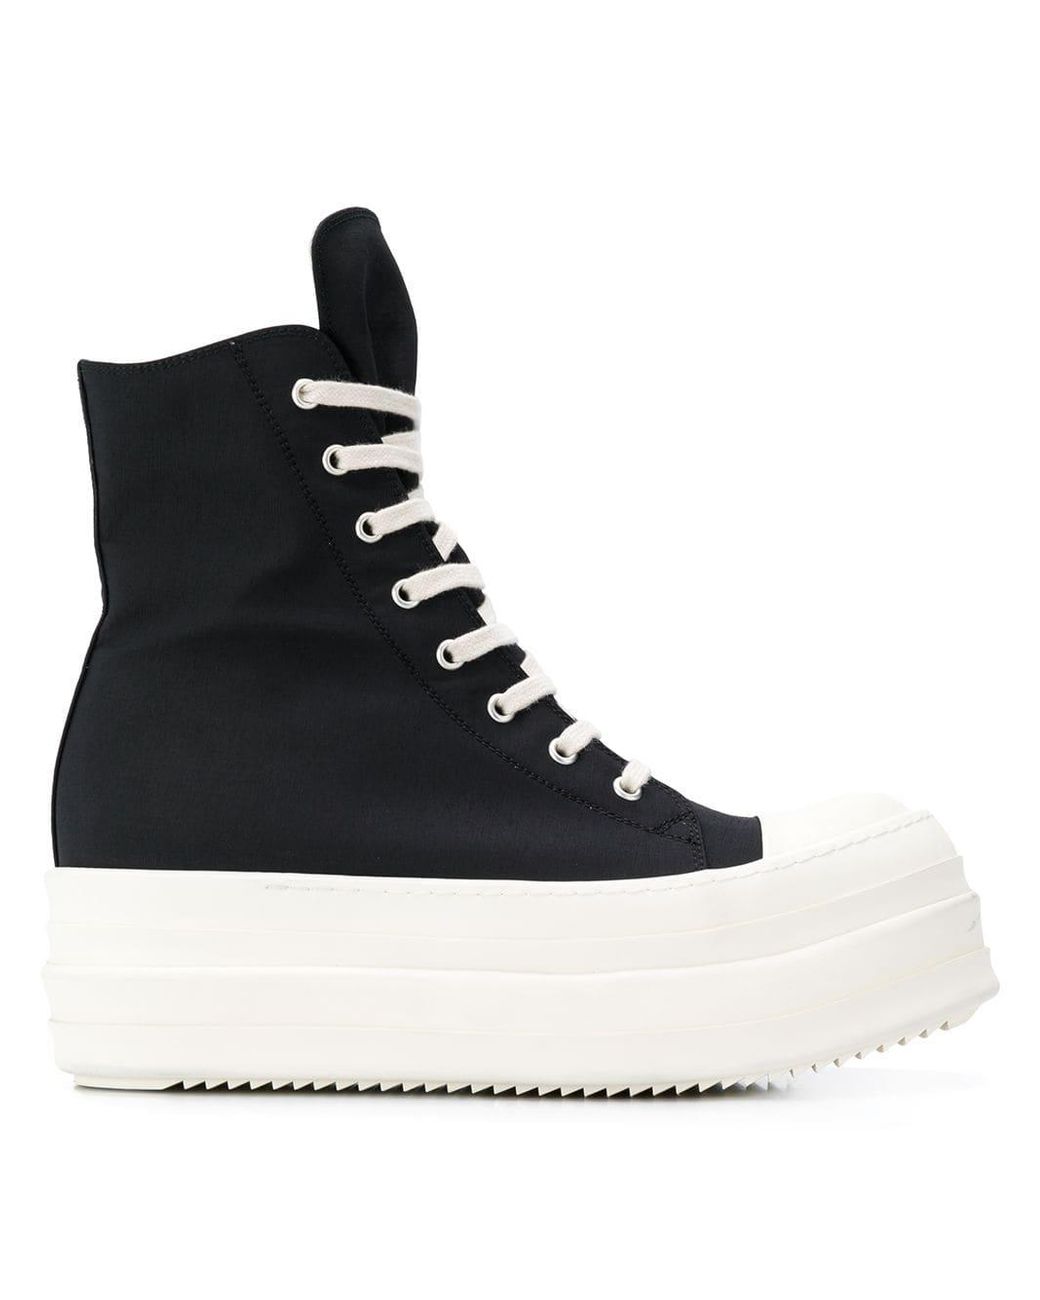 SHUSHOP Skylar Platform Sneakers - Black - Closet Candy Boutique